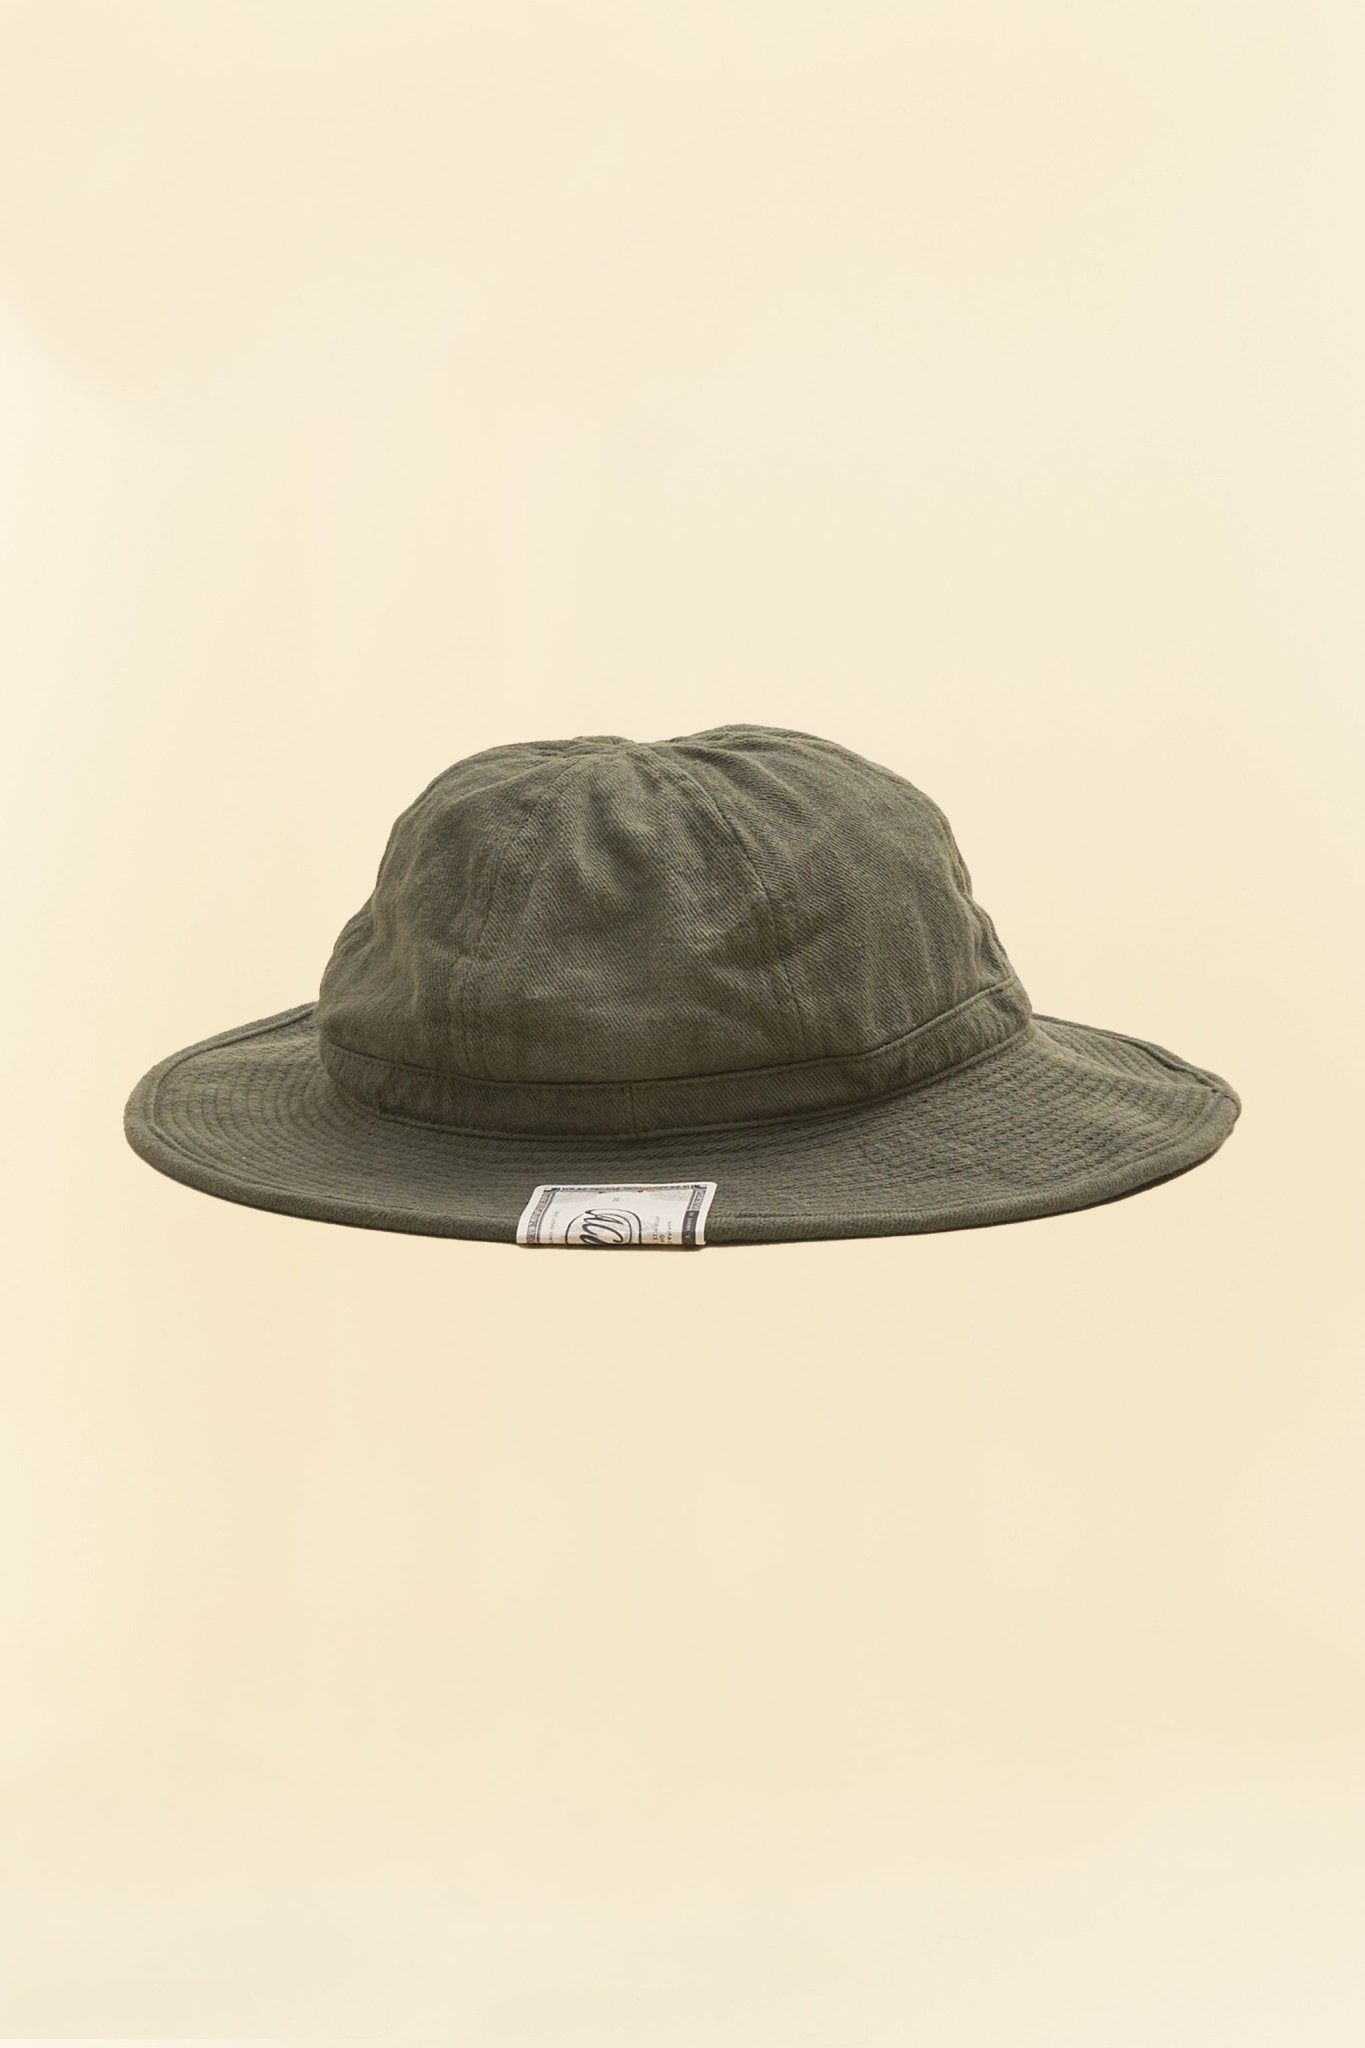 Addict Clothes x HW Dog & Co Linen Fatigue Hat - Army Green -Addict Clothes - URAHARA